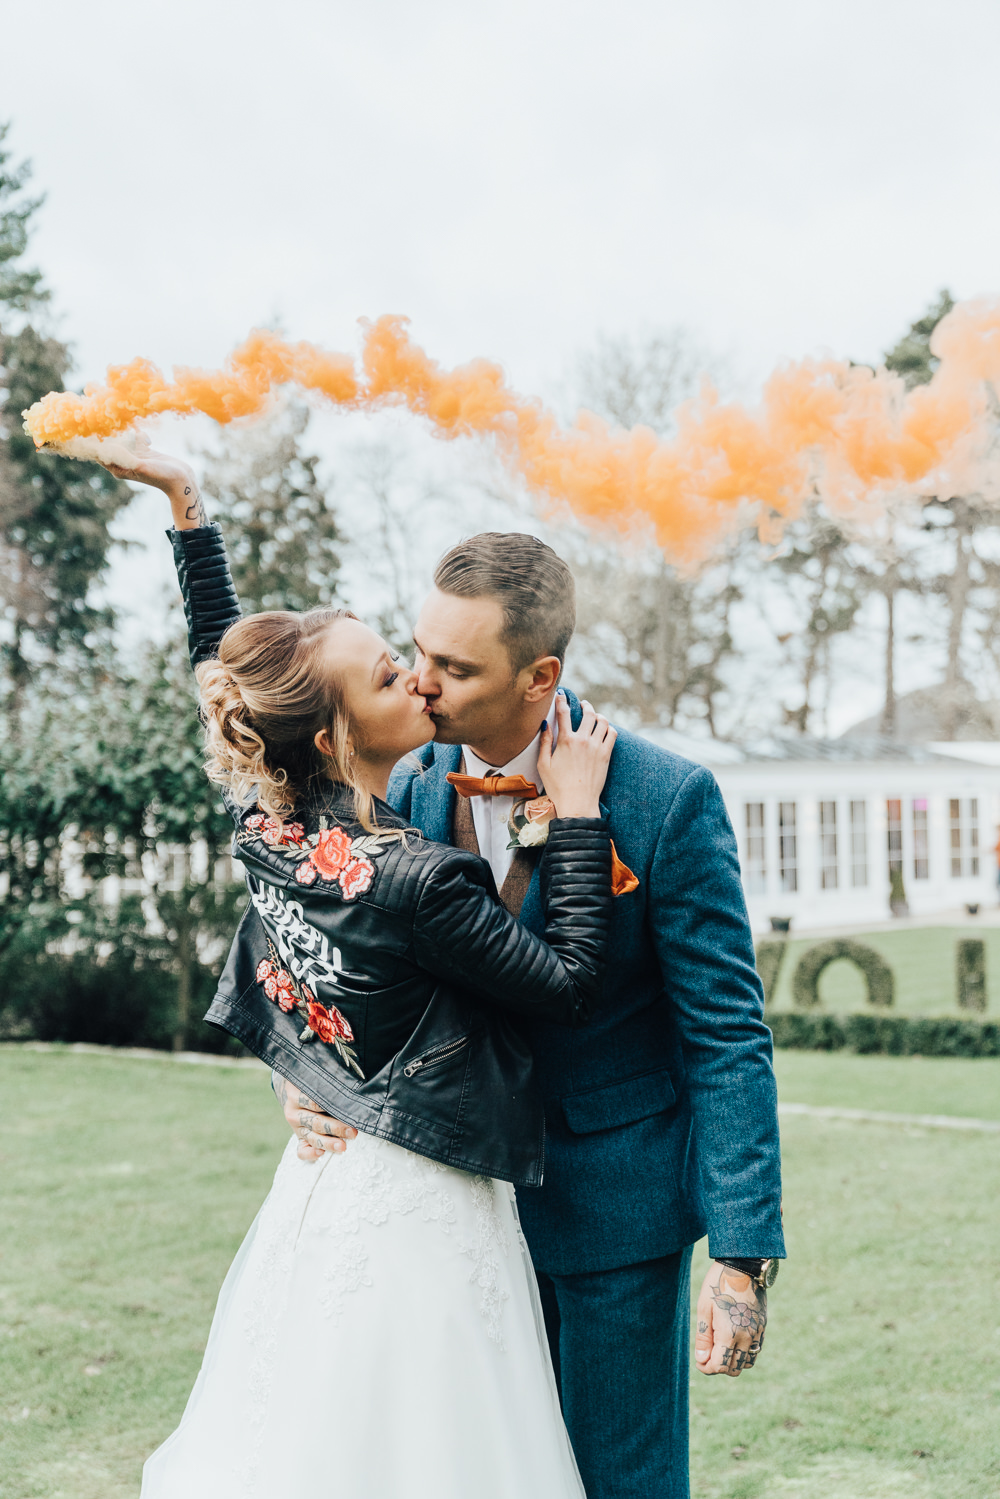 https://whimsicalwonderlandweddings.com/wp-content/uploads/2019/02/Hoop-Wedding-Ideas-Rebecca-Carpenter-Photography-54.jpg